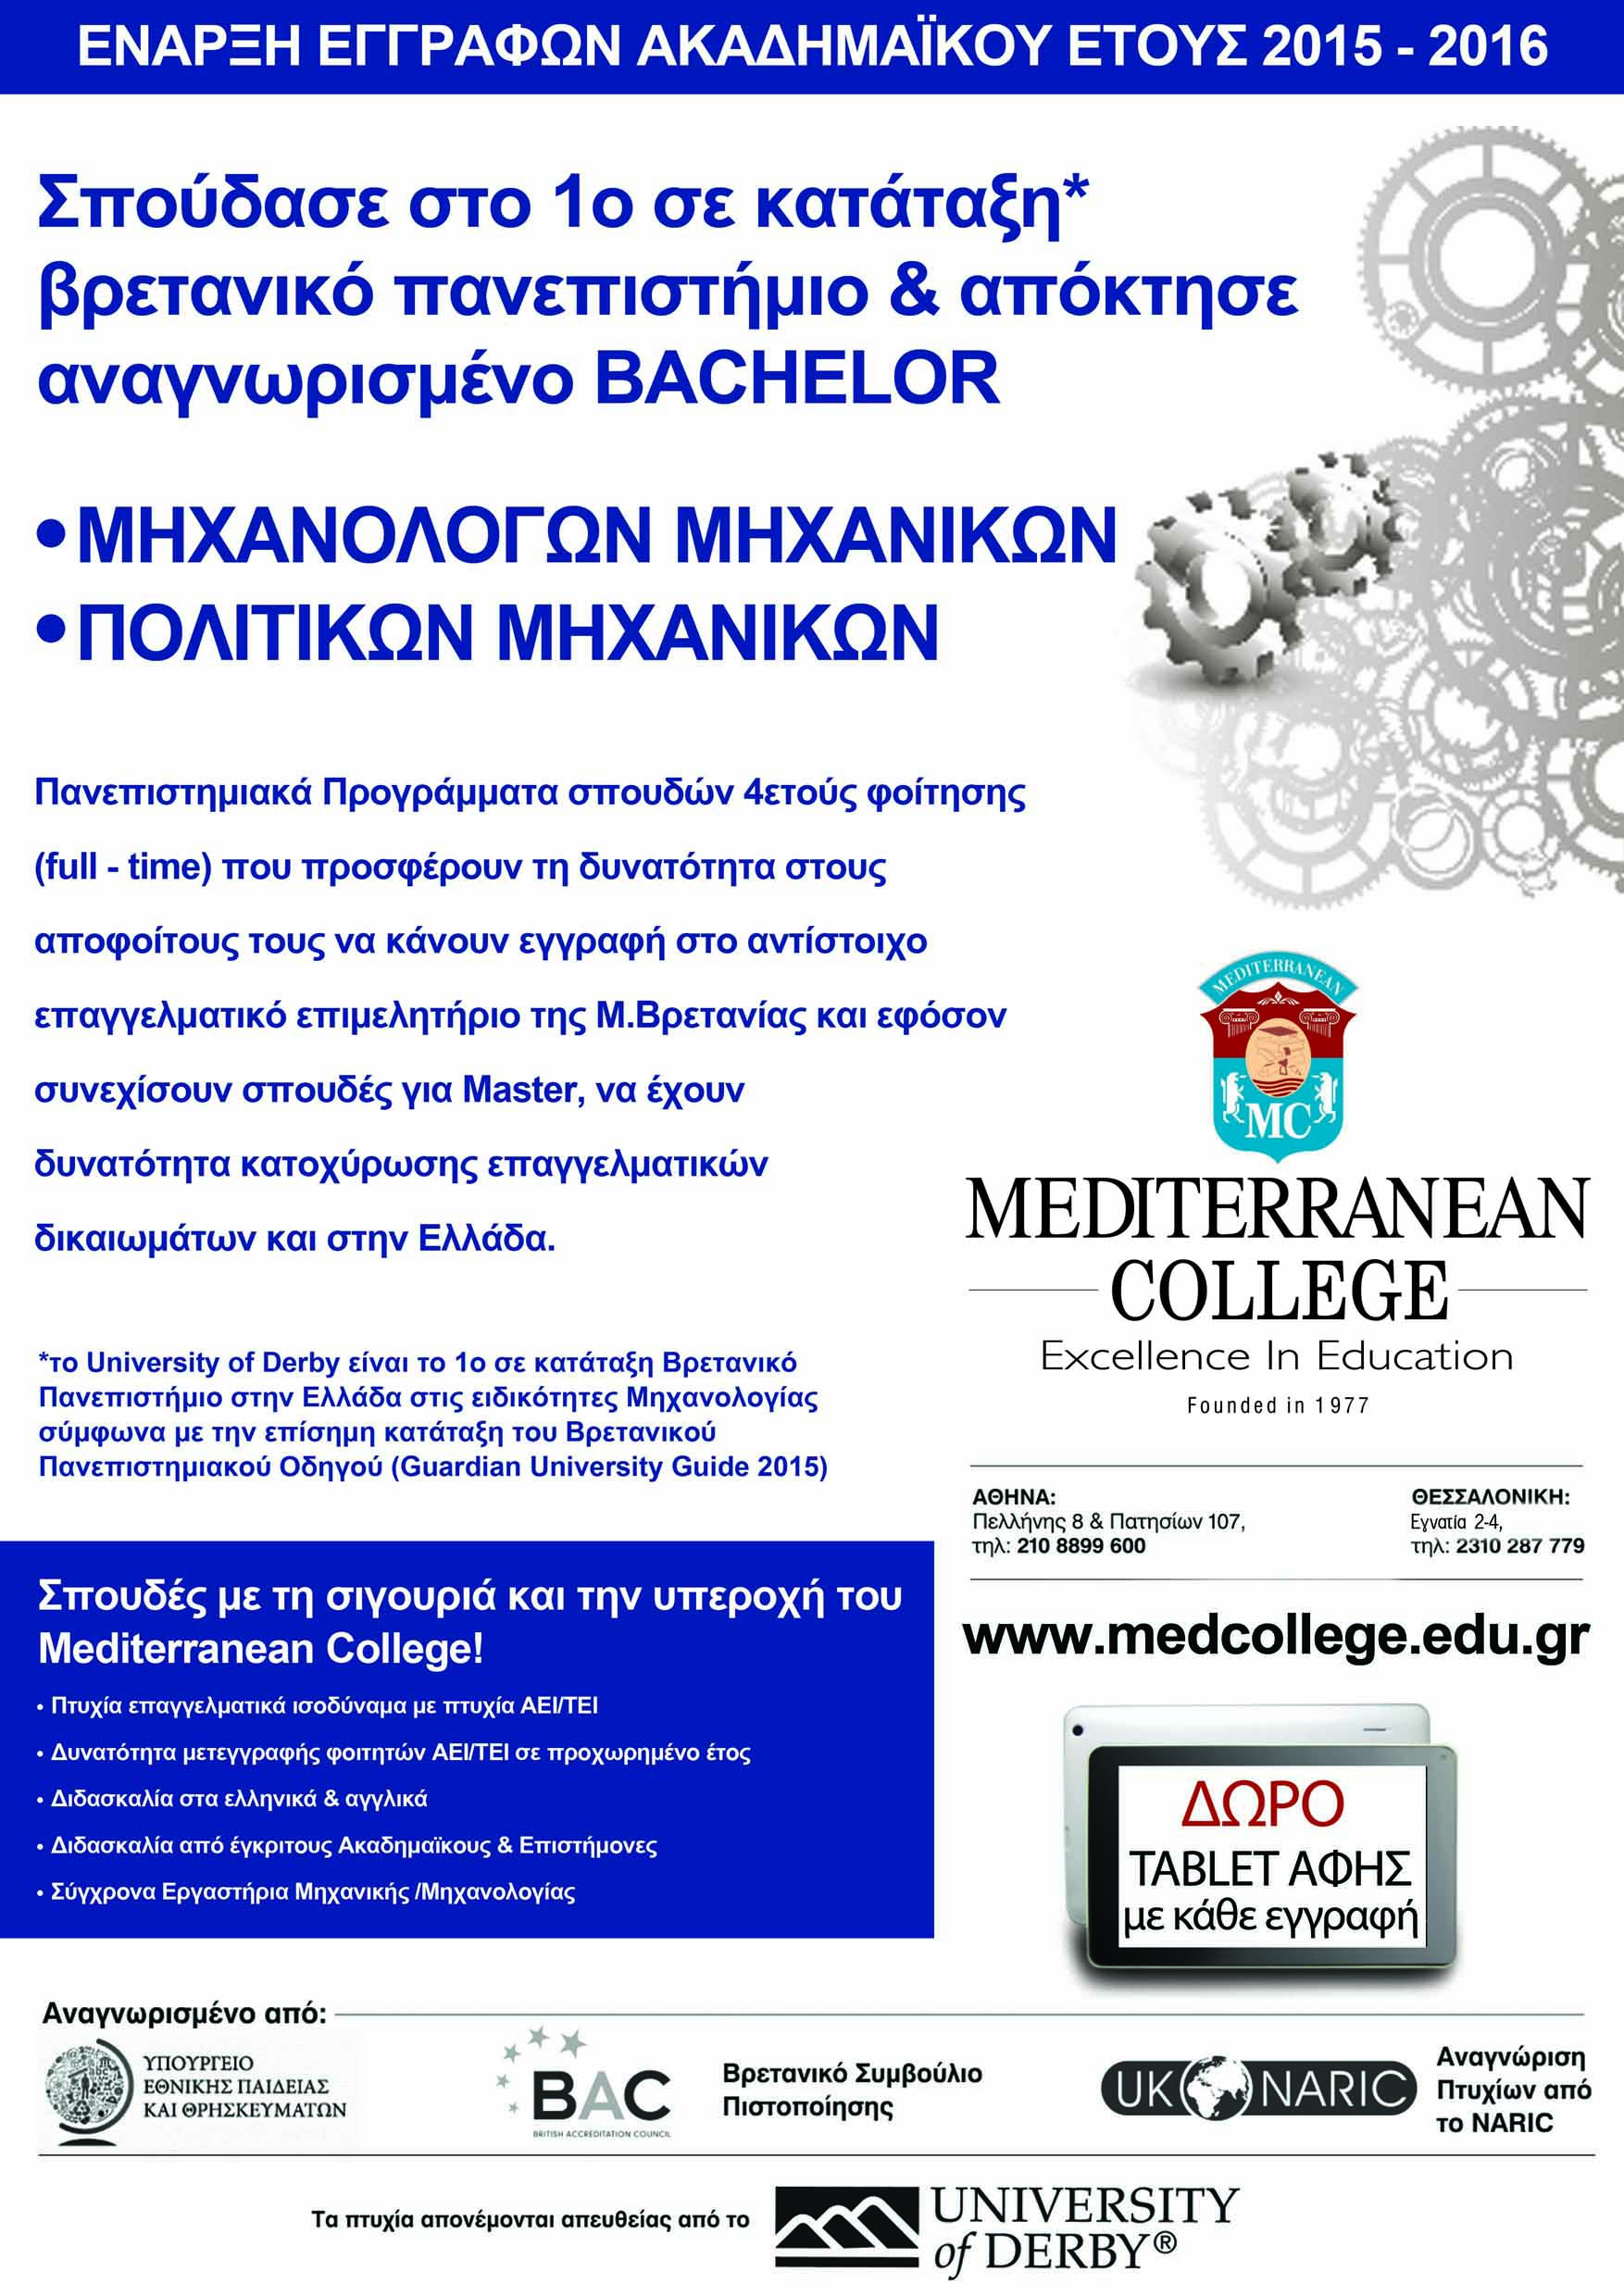 MEDITERRANEAN COLLEGE: Σε αποκλειστικότητα για την Ελλάδα Σπουδές Μηχανολόγων Μηχανικών σε ένα από τα καλύτερα Βρετανικά Πανεπιστήμια